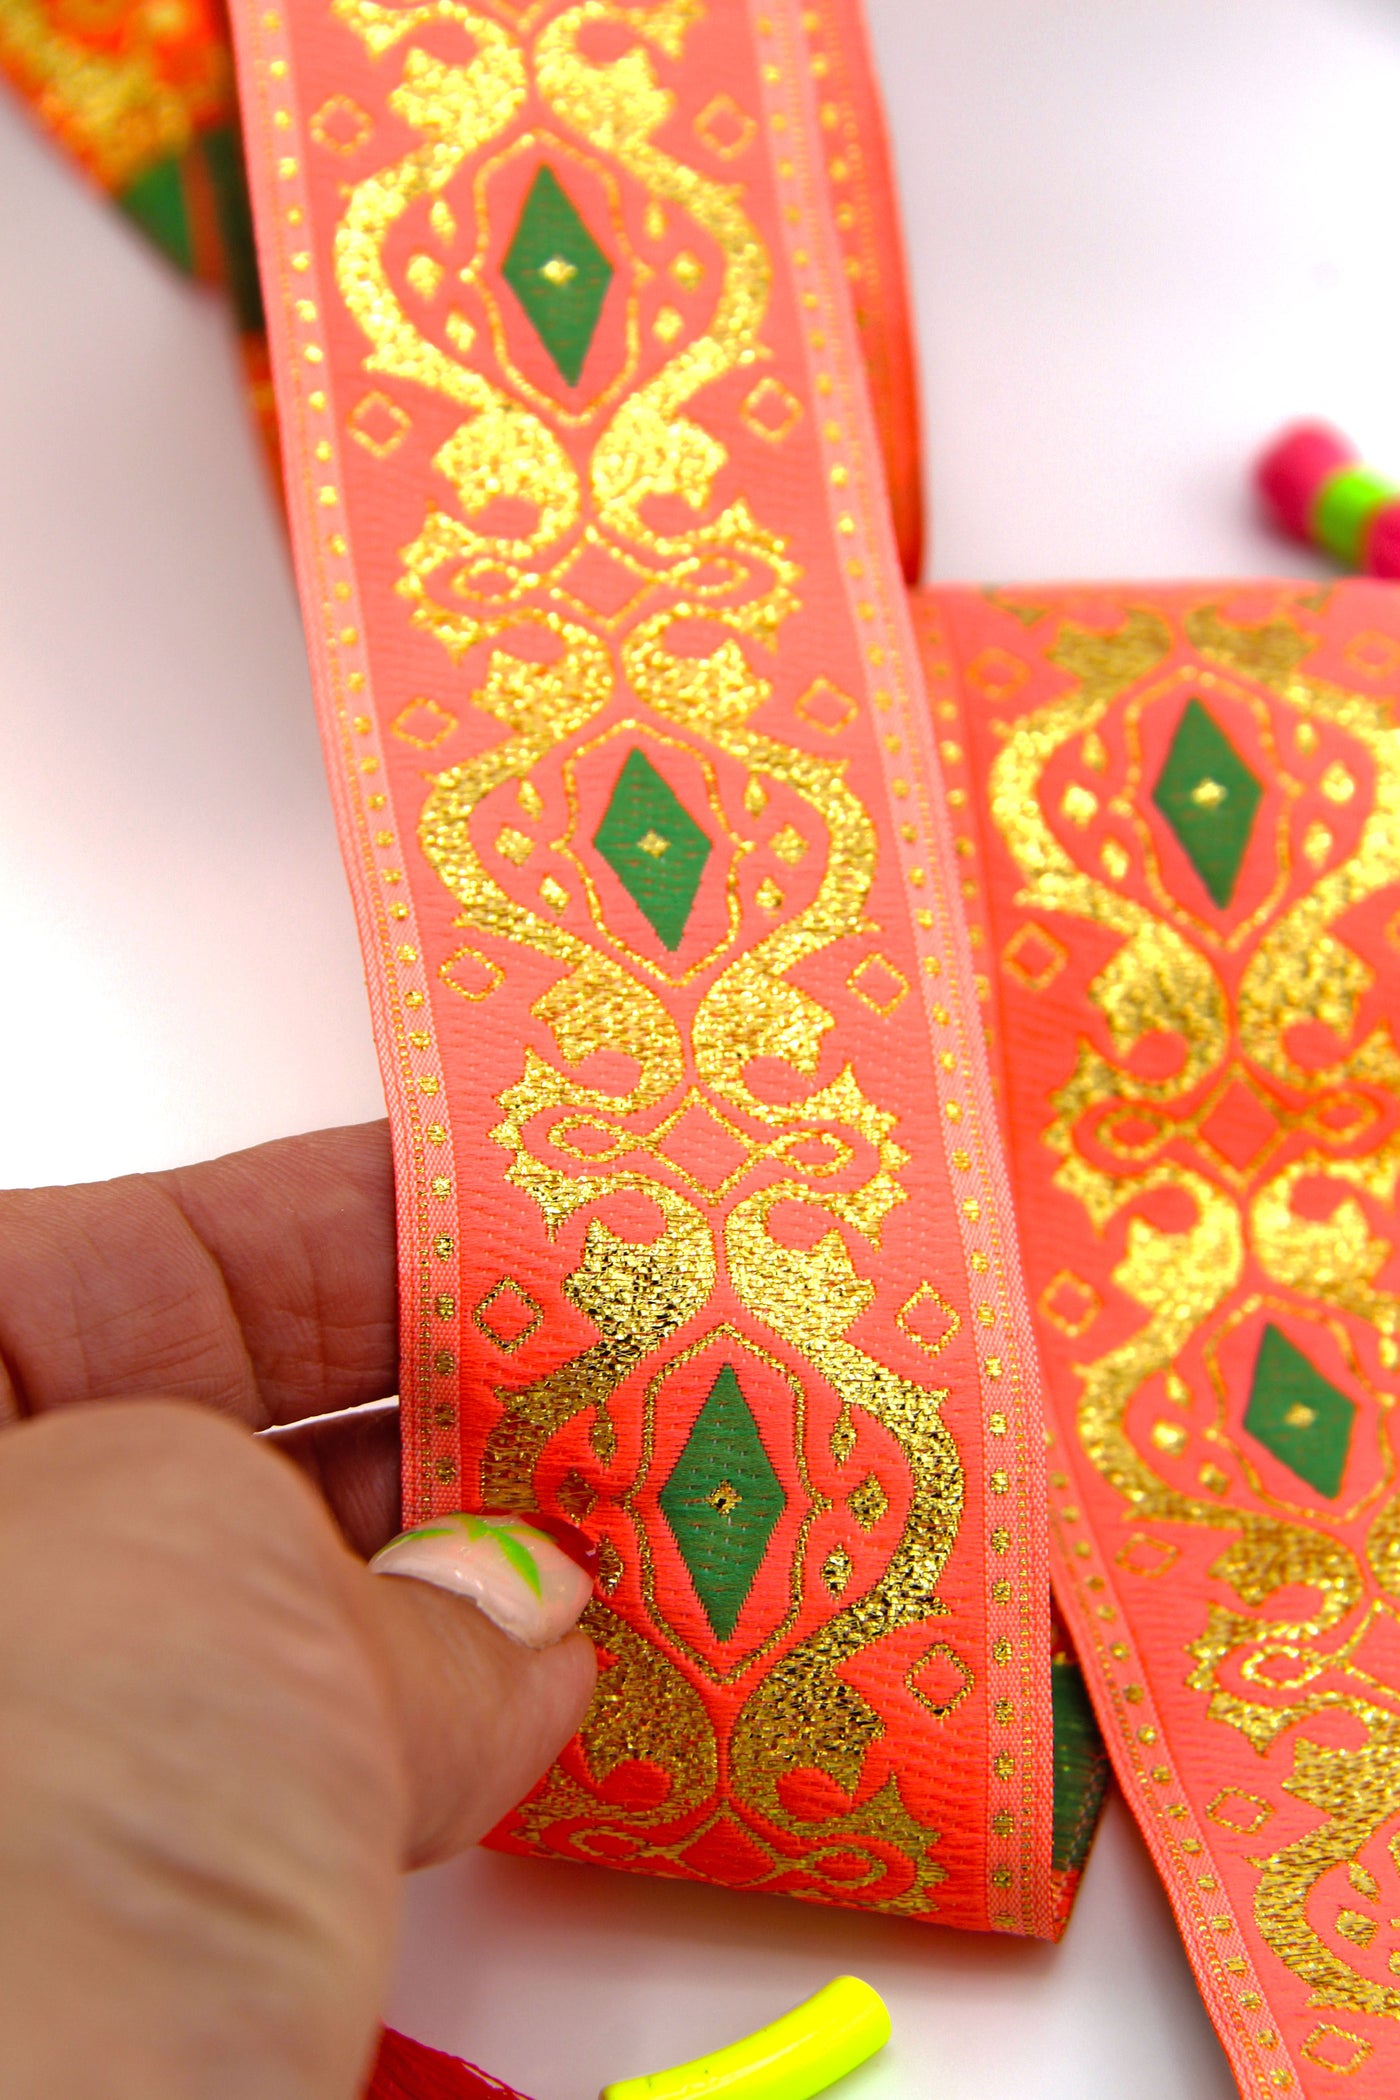 Neon Coral & Gold Ribbon: Jacquard Indian Sari Border/Trim for upcycling clothing